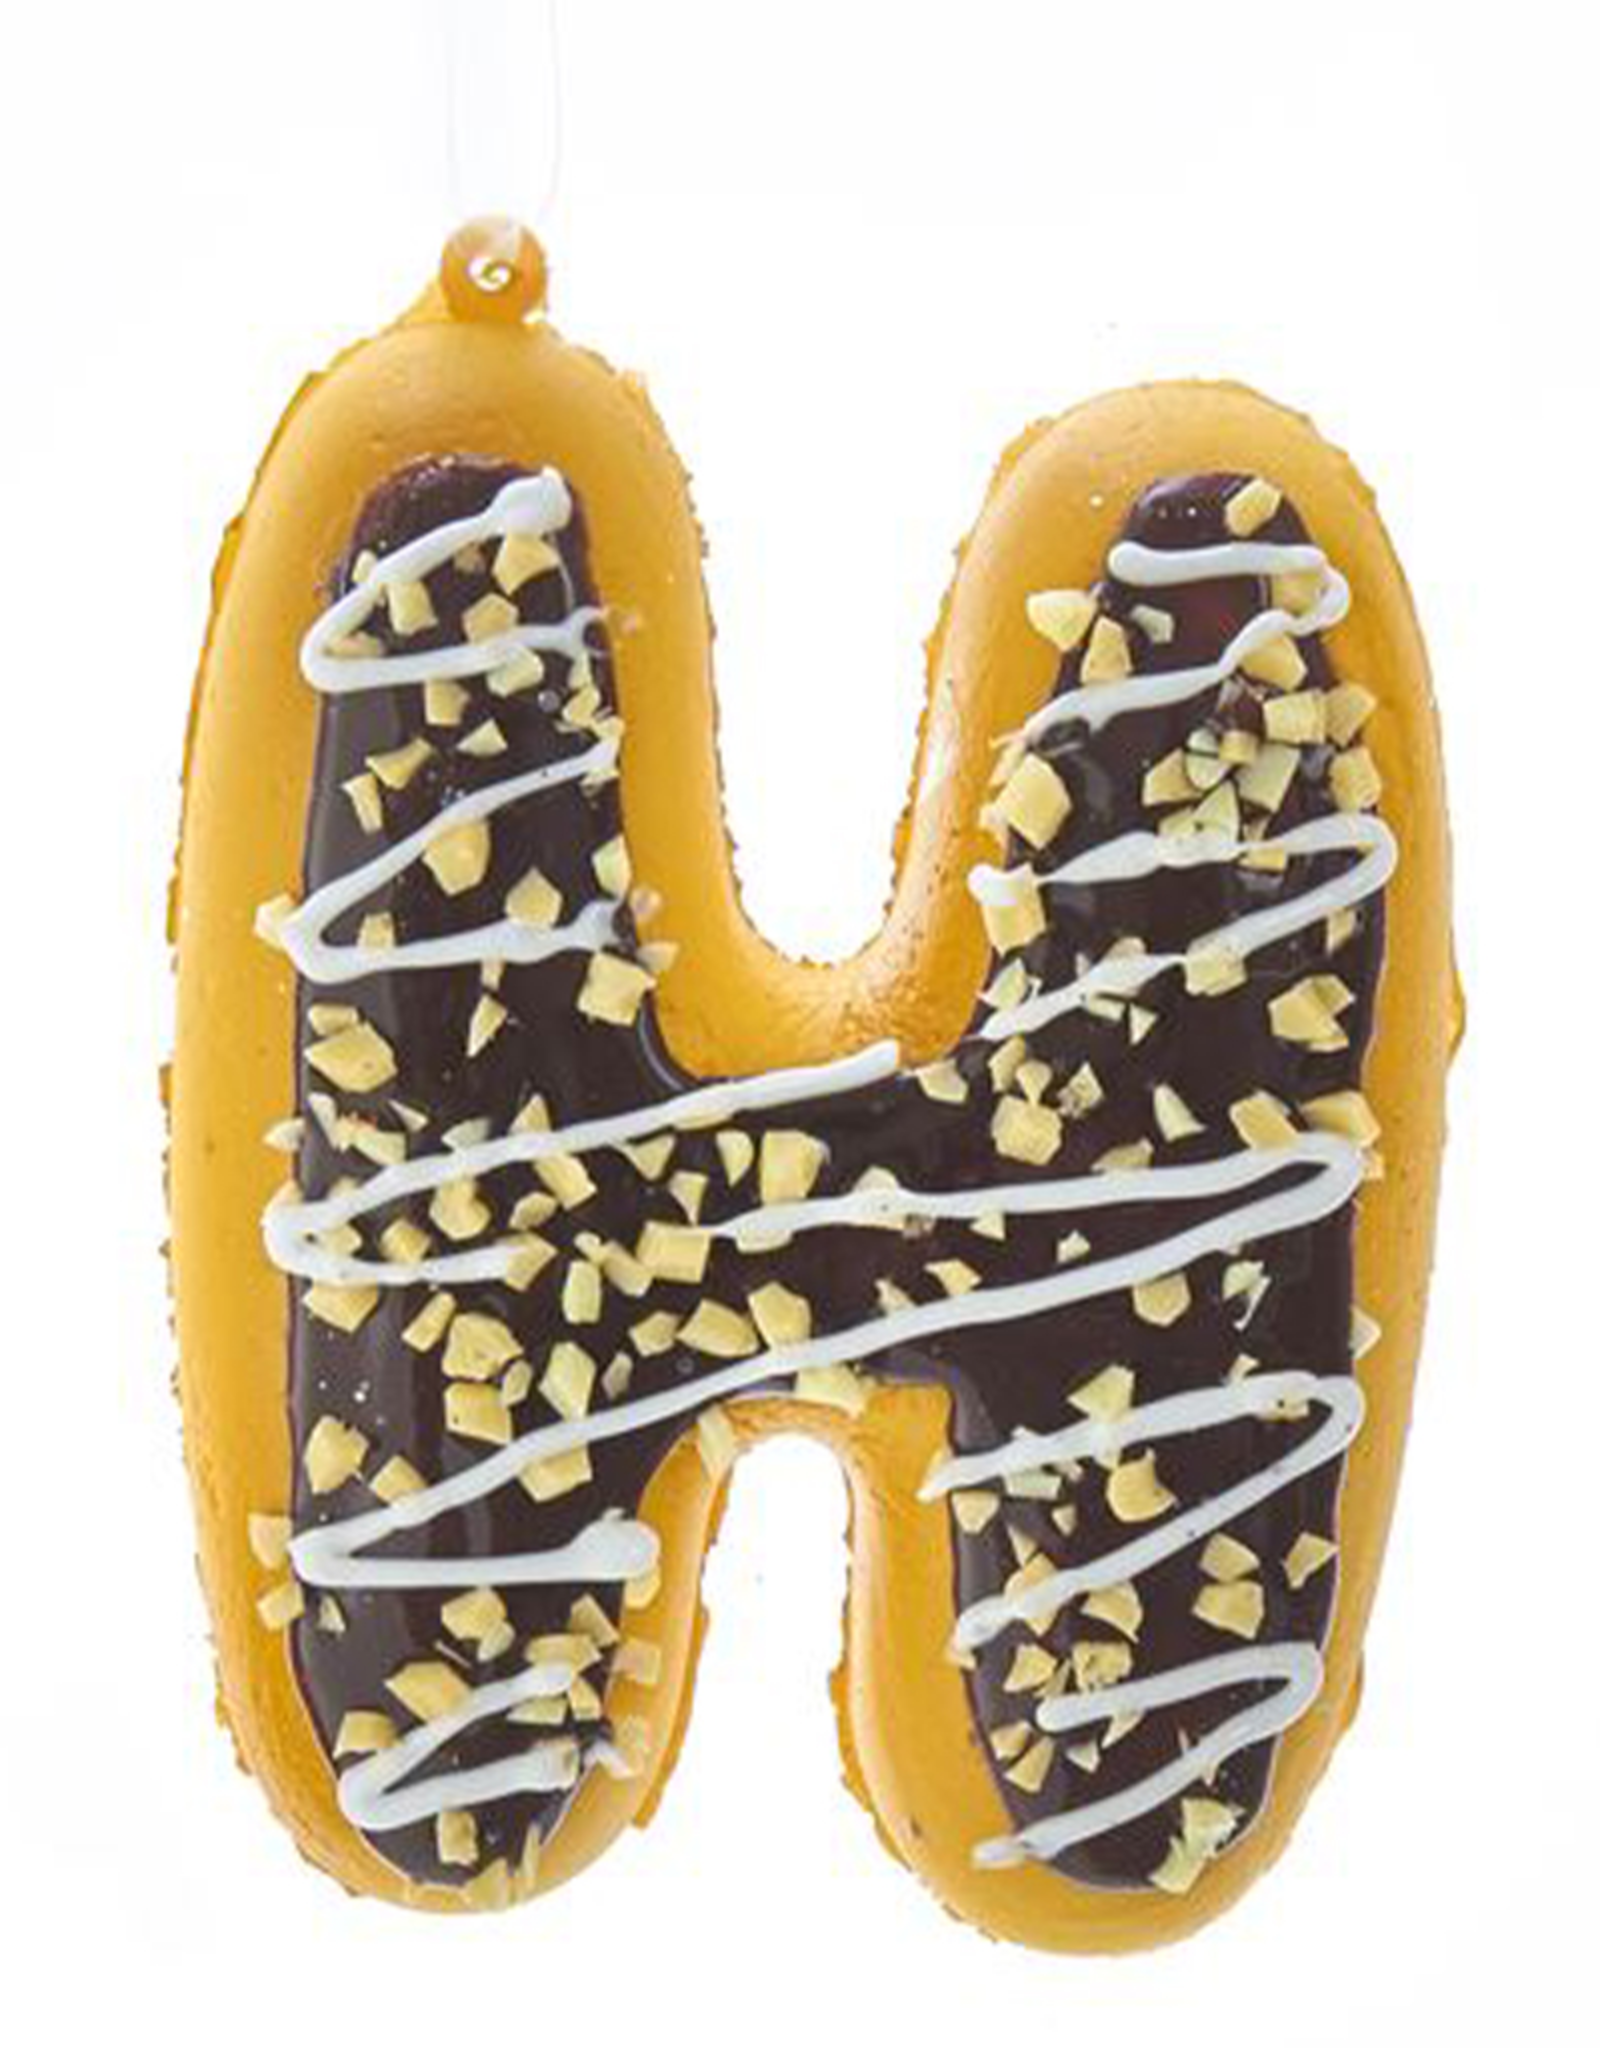 Kurt Adler Squeezable Donut Letter Ornament Initial H